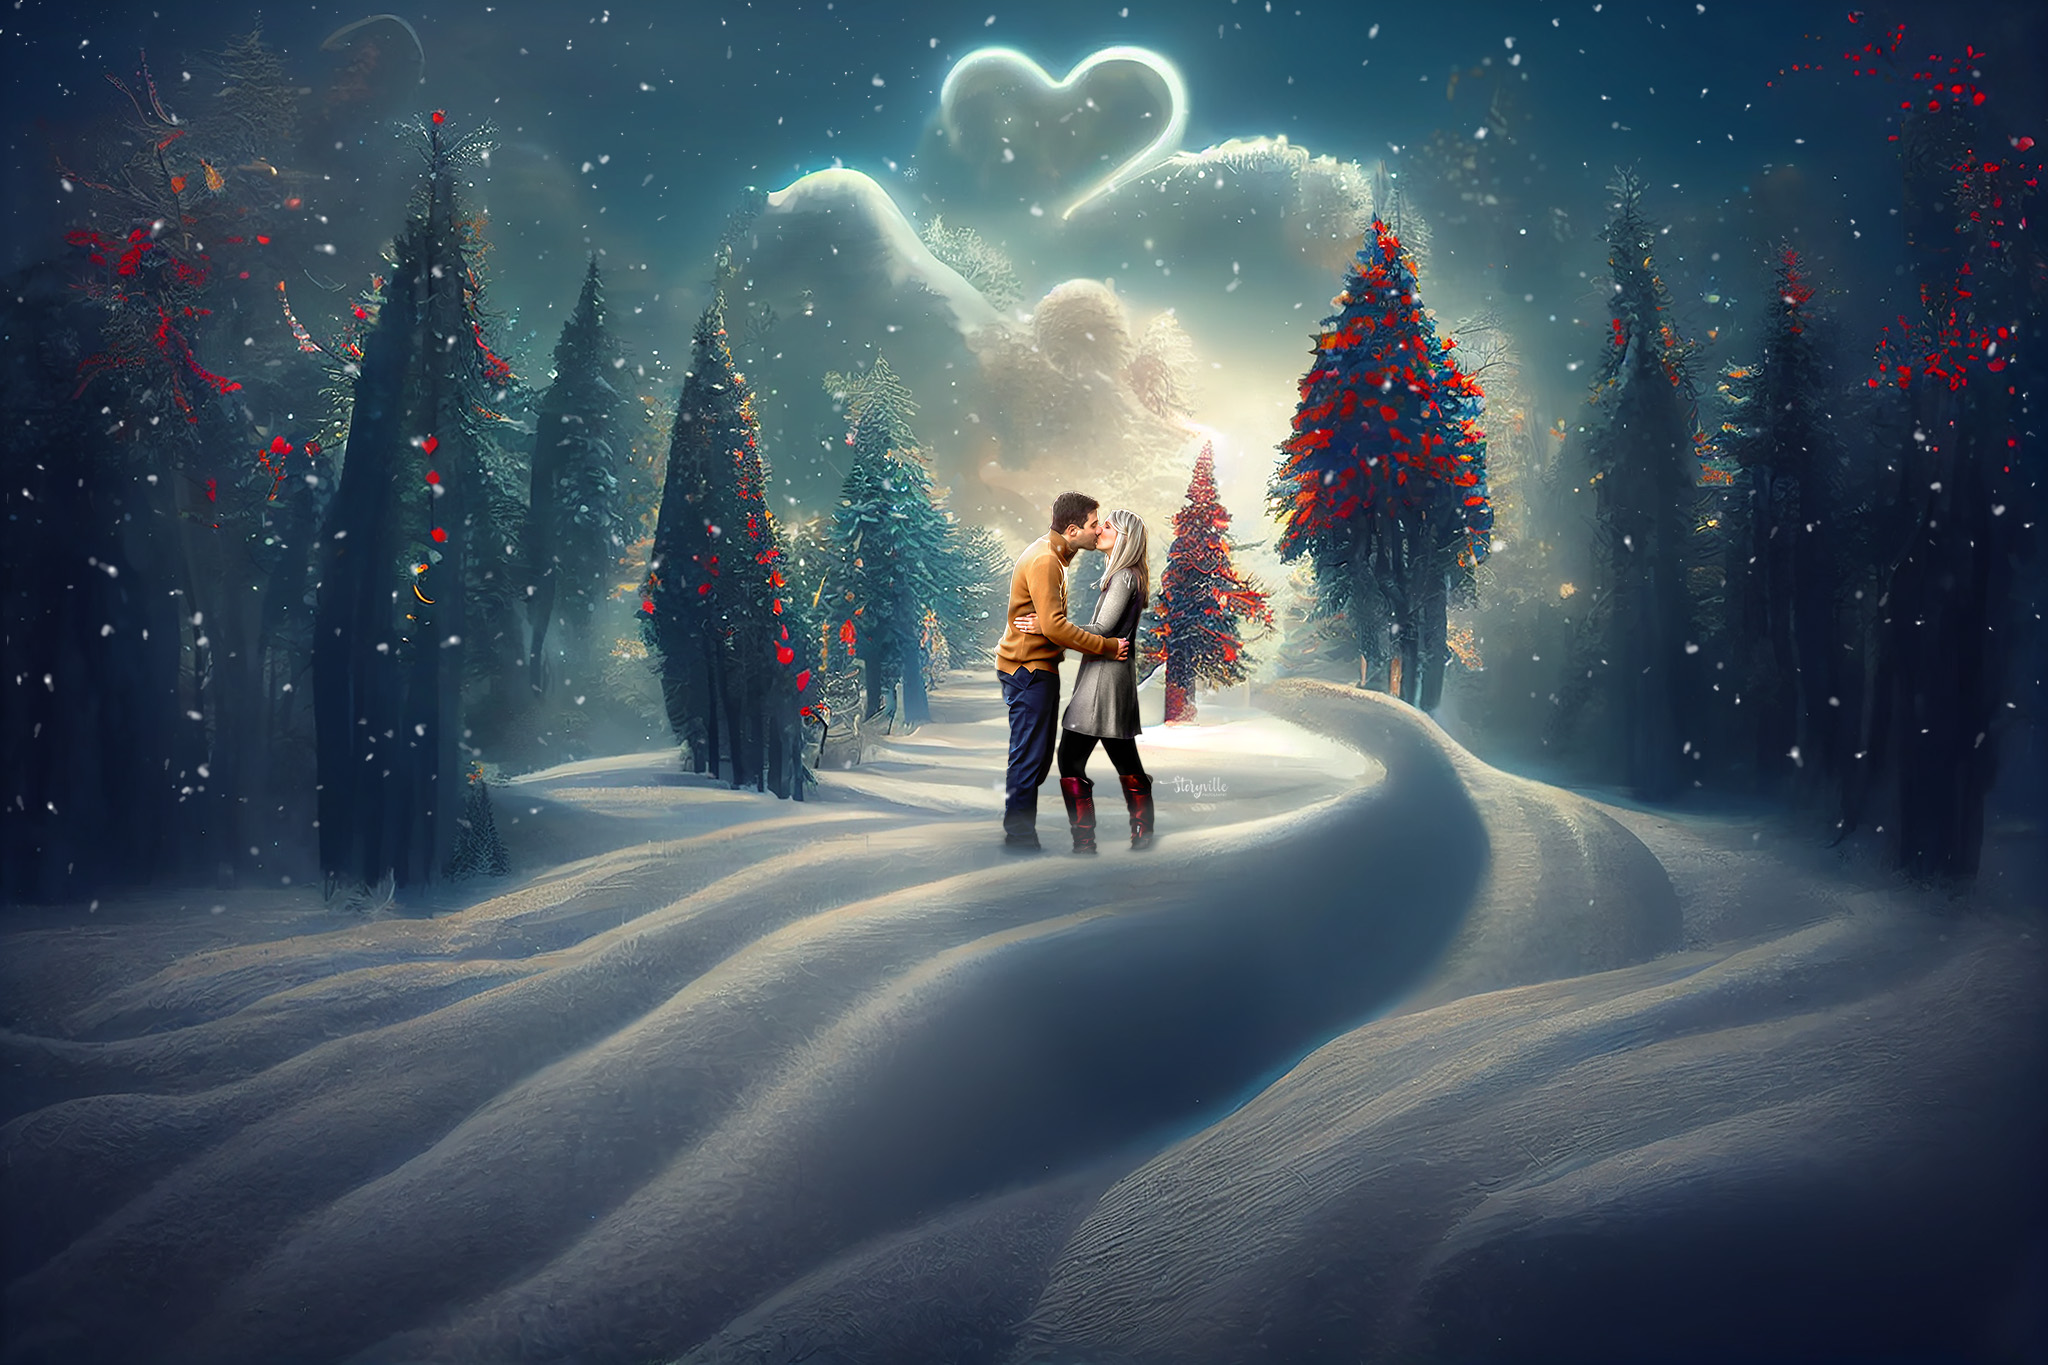 https://www.storyvillephotography.com/wp-content/uploads/2023/01/Storyville-Magical-Winter-Wonderland-with-Heart-Cloud-Digital-Background-Edit.jpg